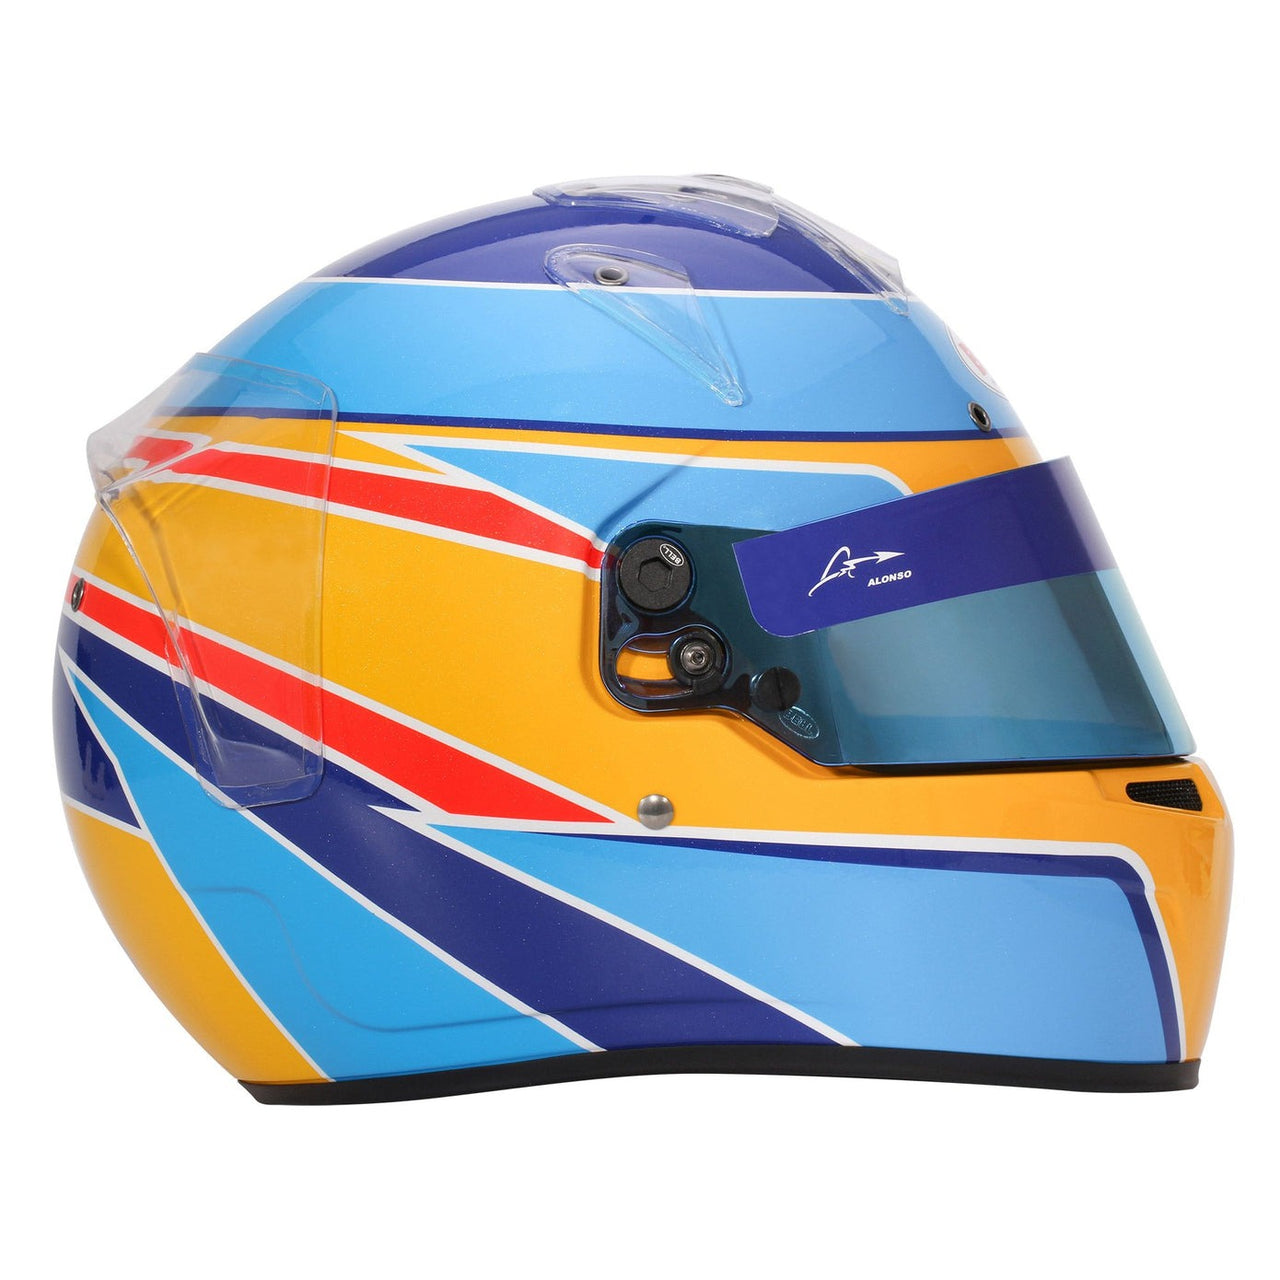 Bell KC7-CMR Alonso Kart Racing helmet right side Image